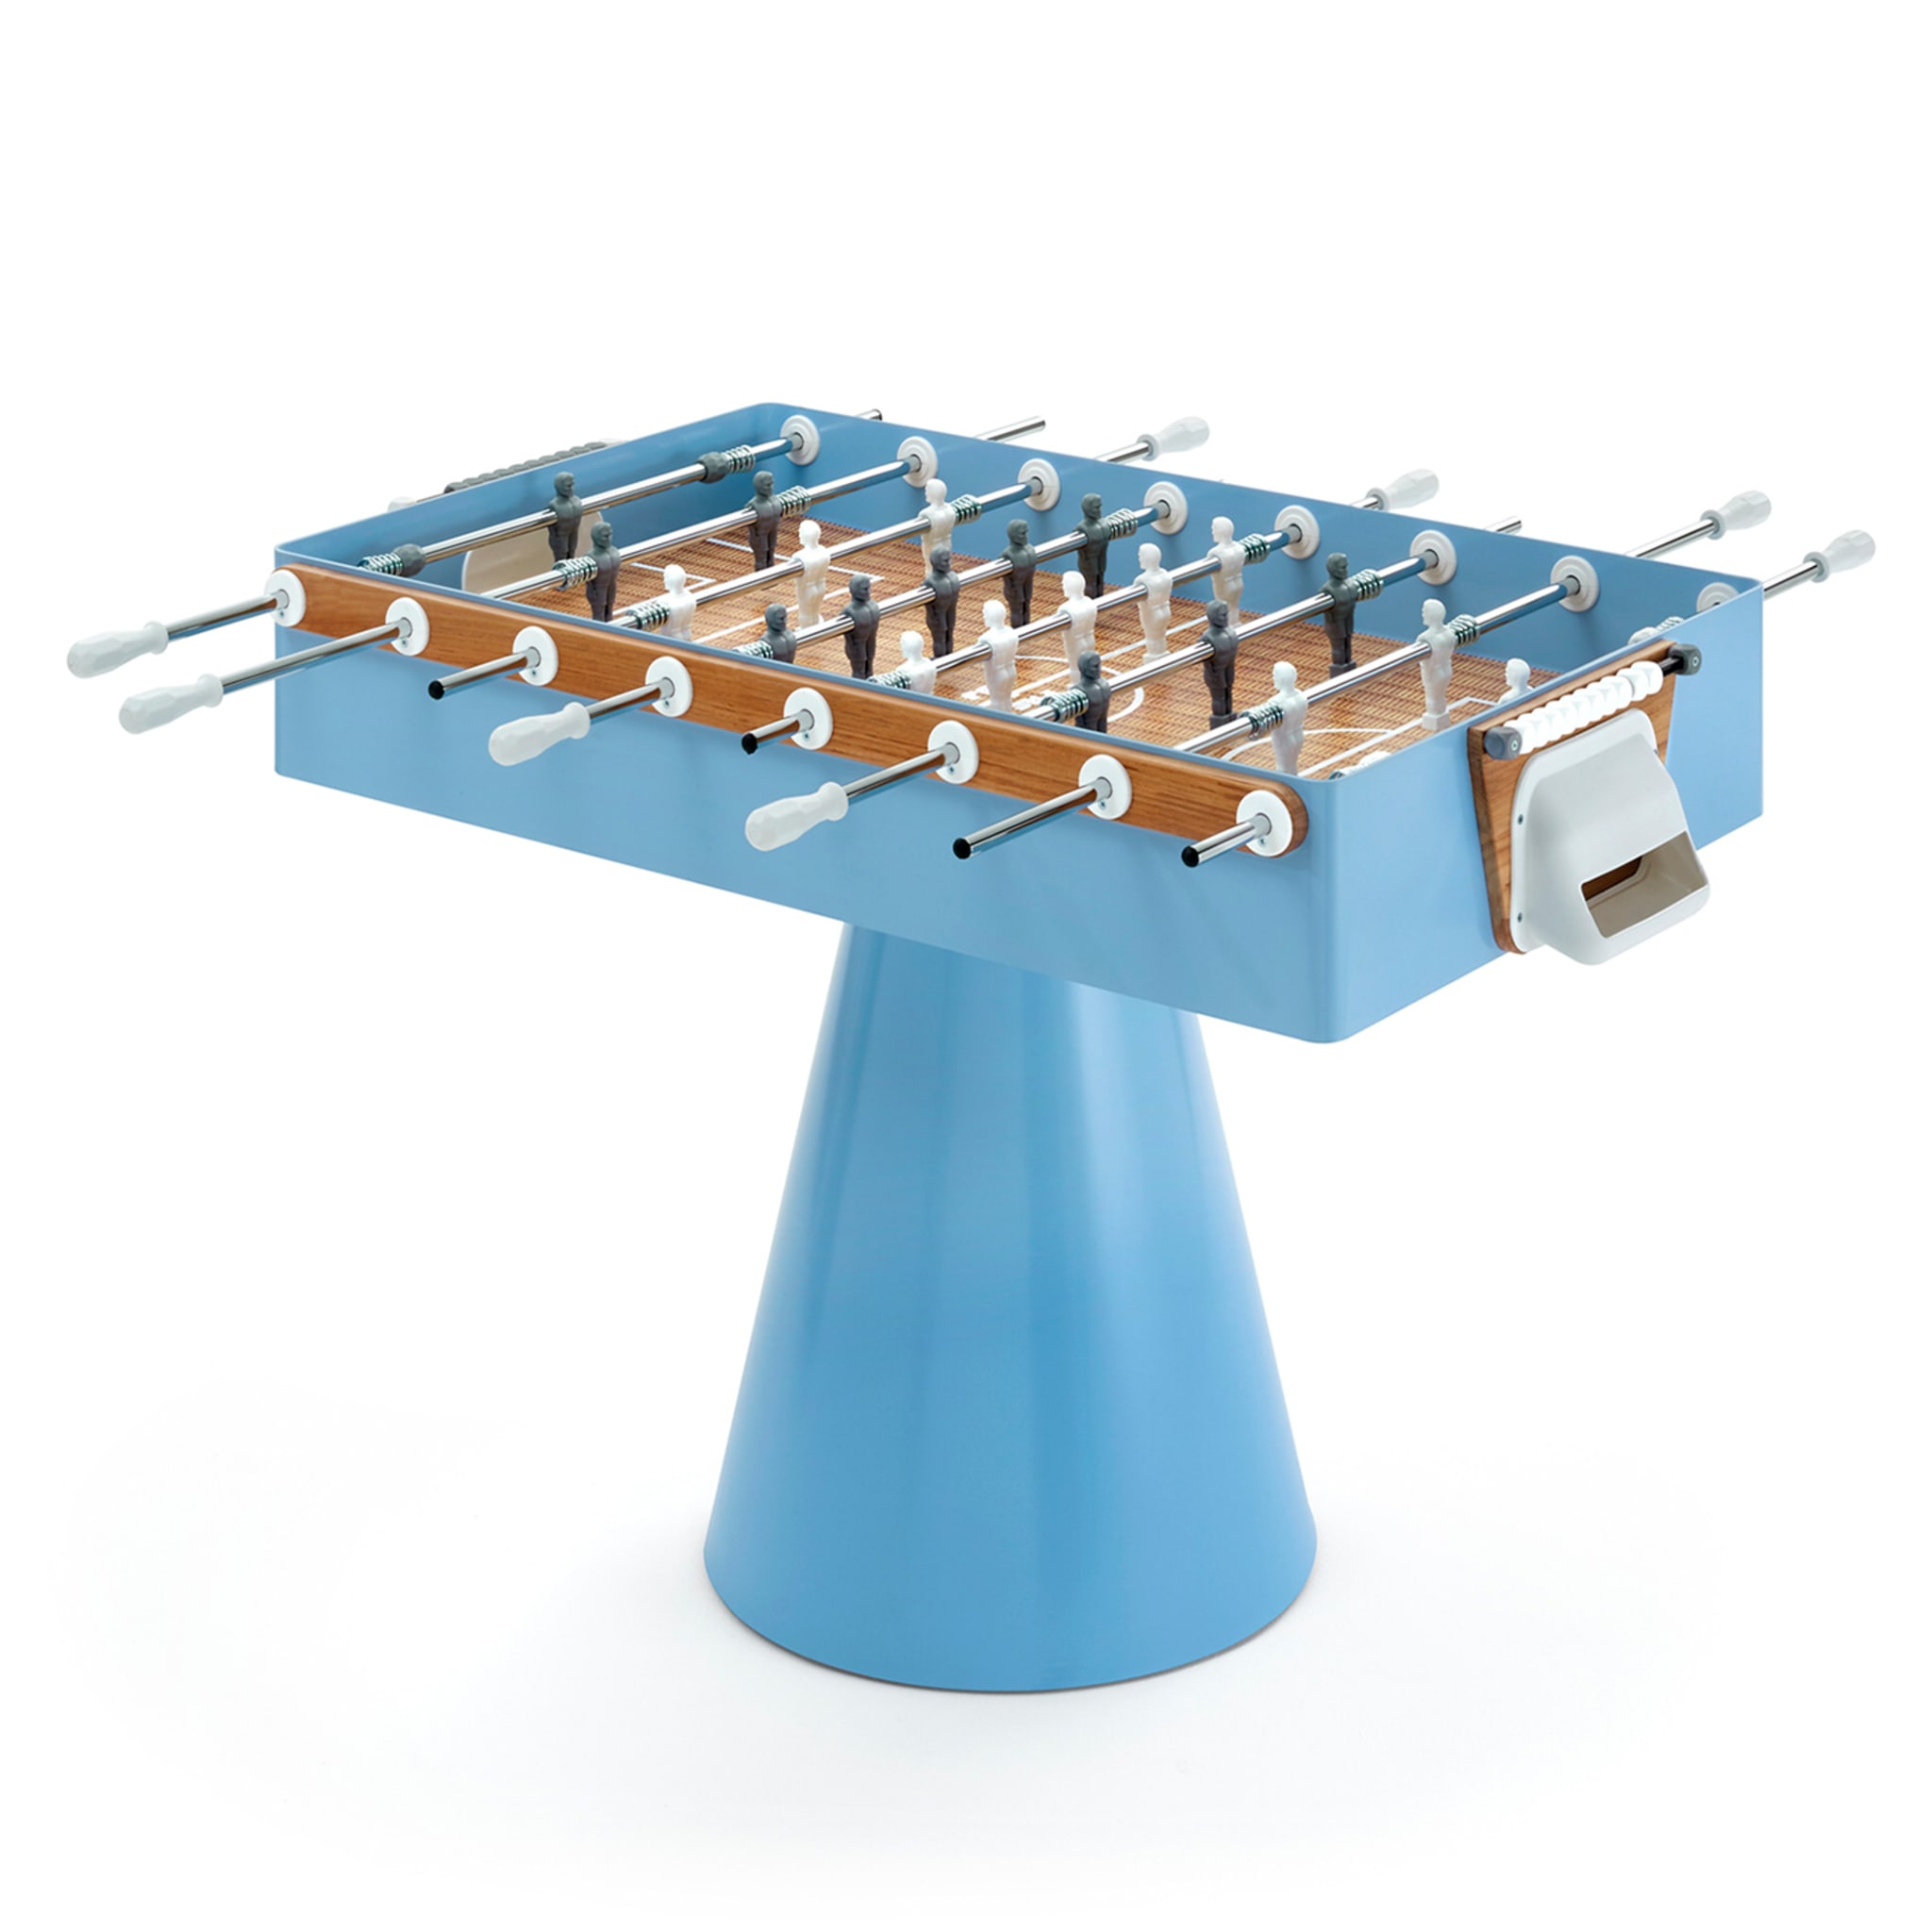 Ciclope Foosball Table Capri Sky Blue by Basaglia + Rota Nodari - Alternative view 1